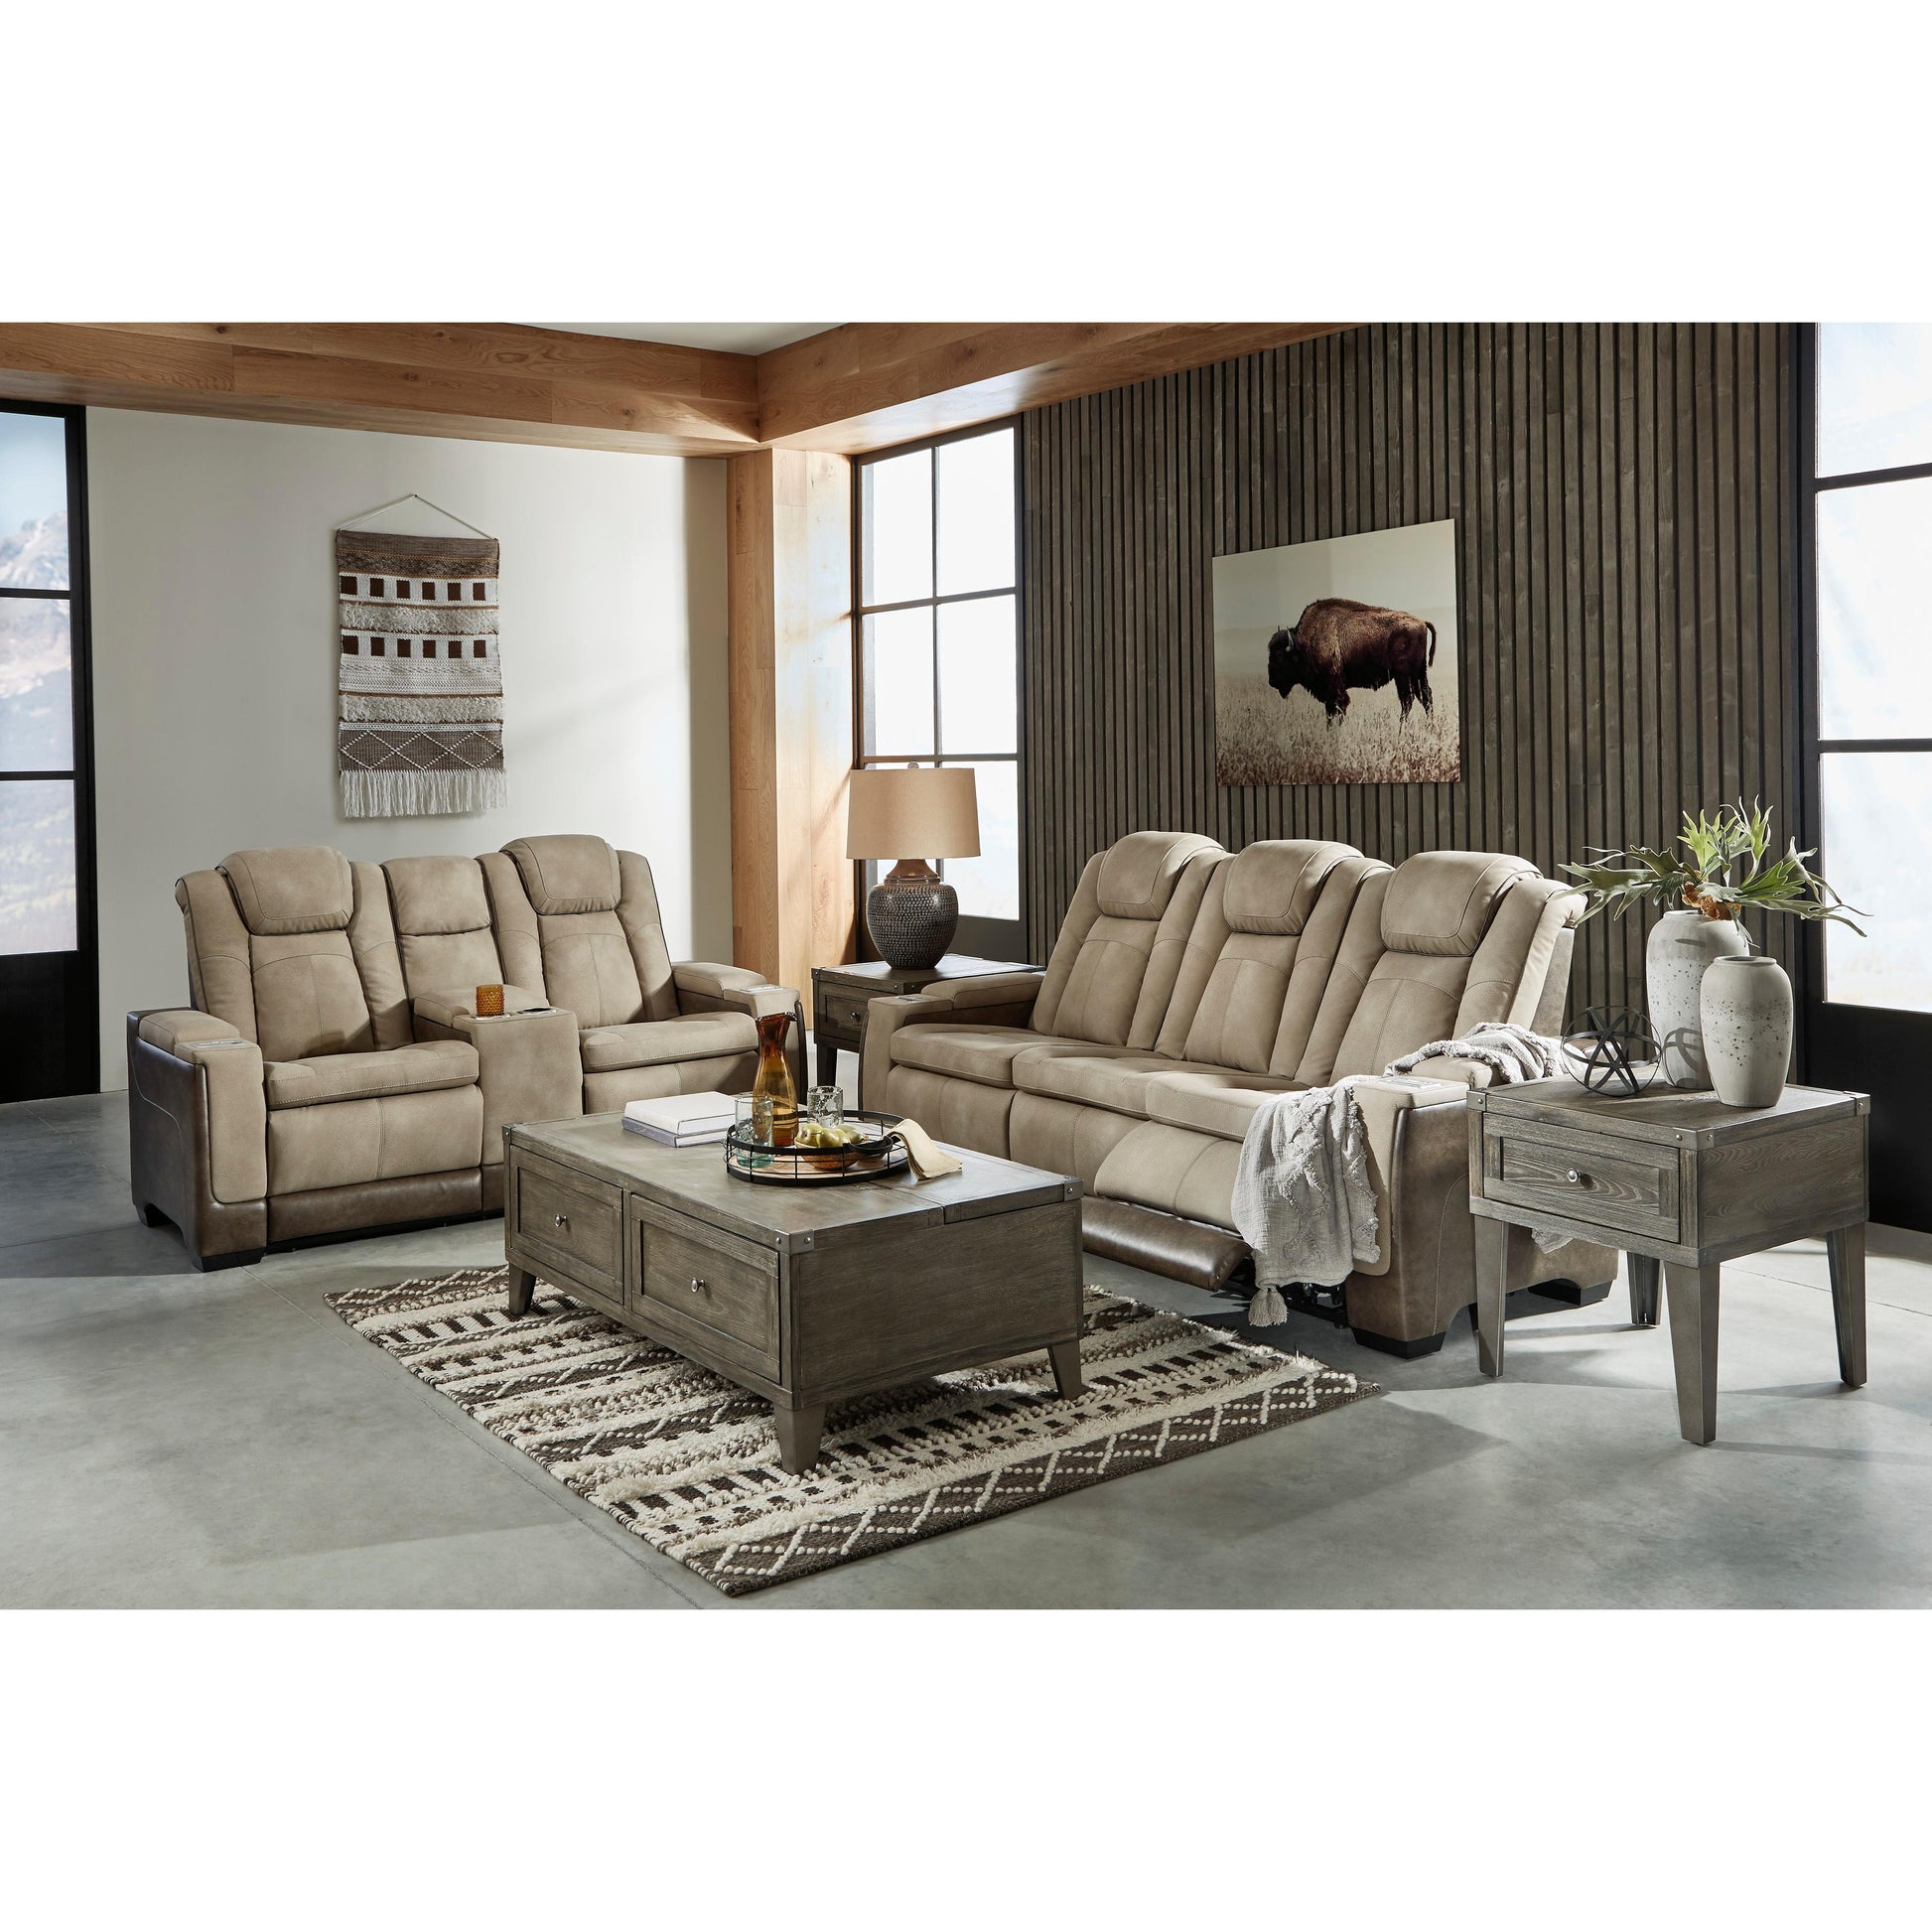 Signature Design by Ashley Next-Gen Durapella 22003 2 pc Power Reclining Living Room Set IMAGE 1